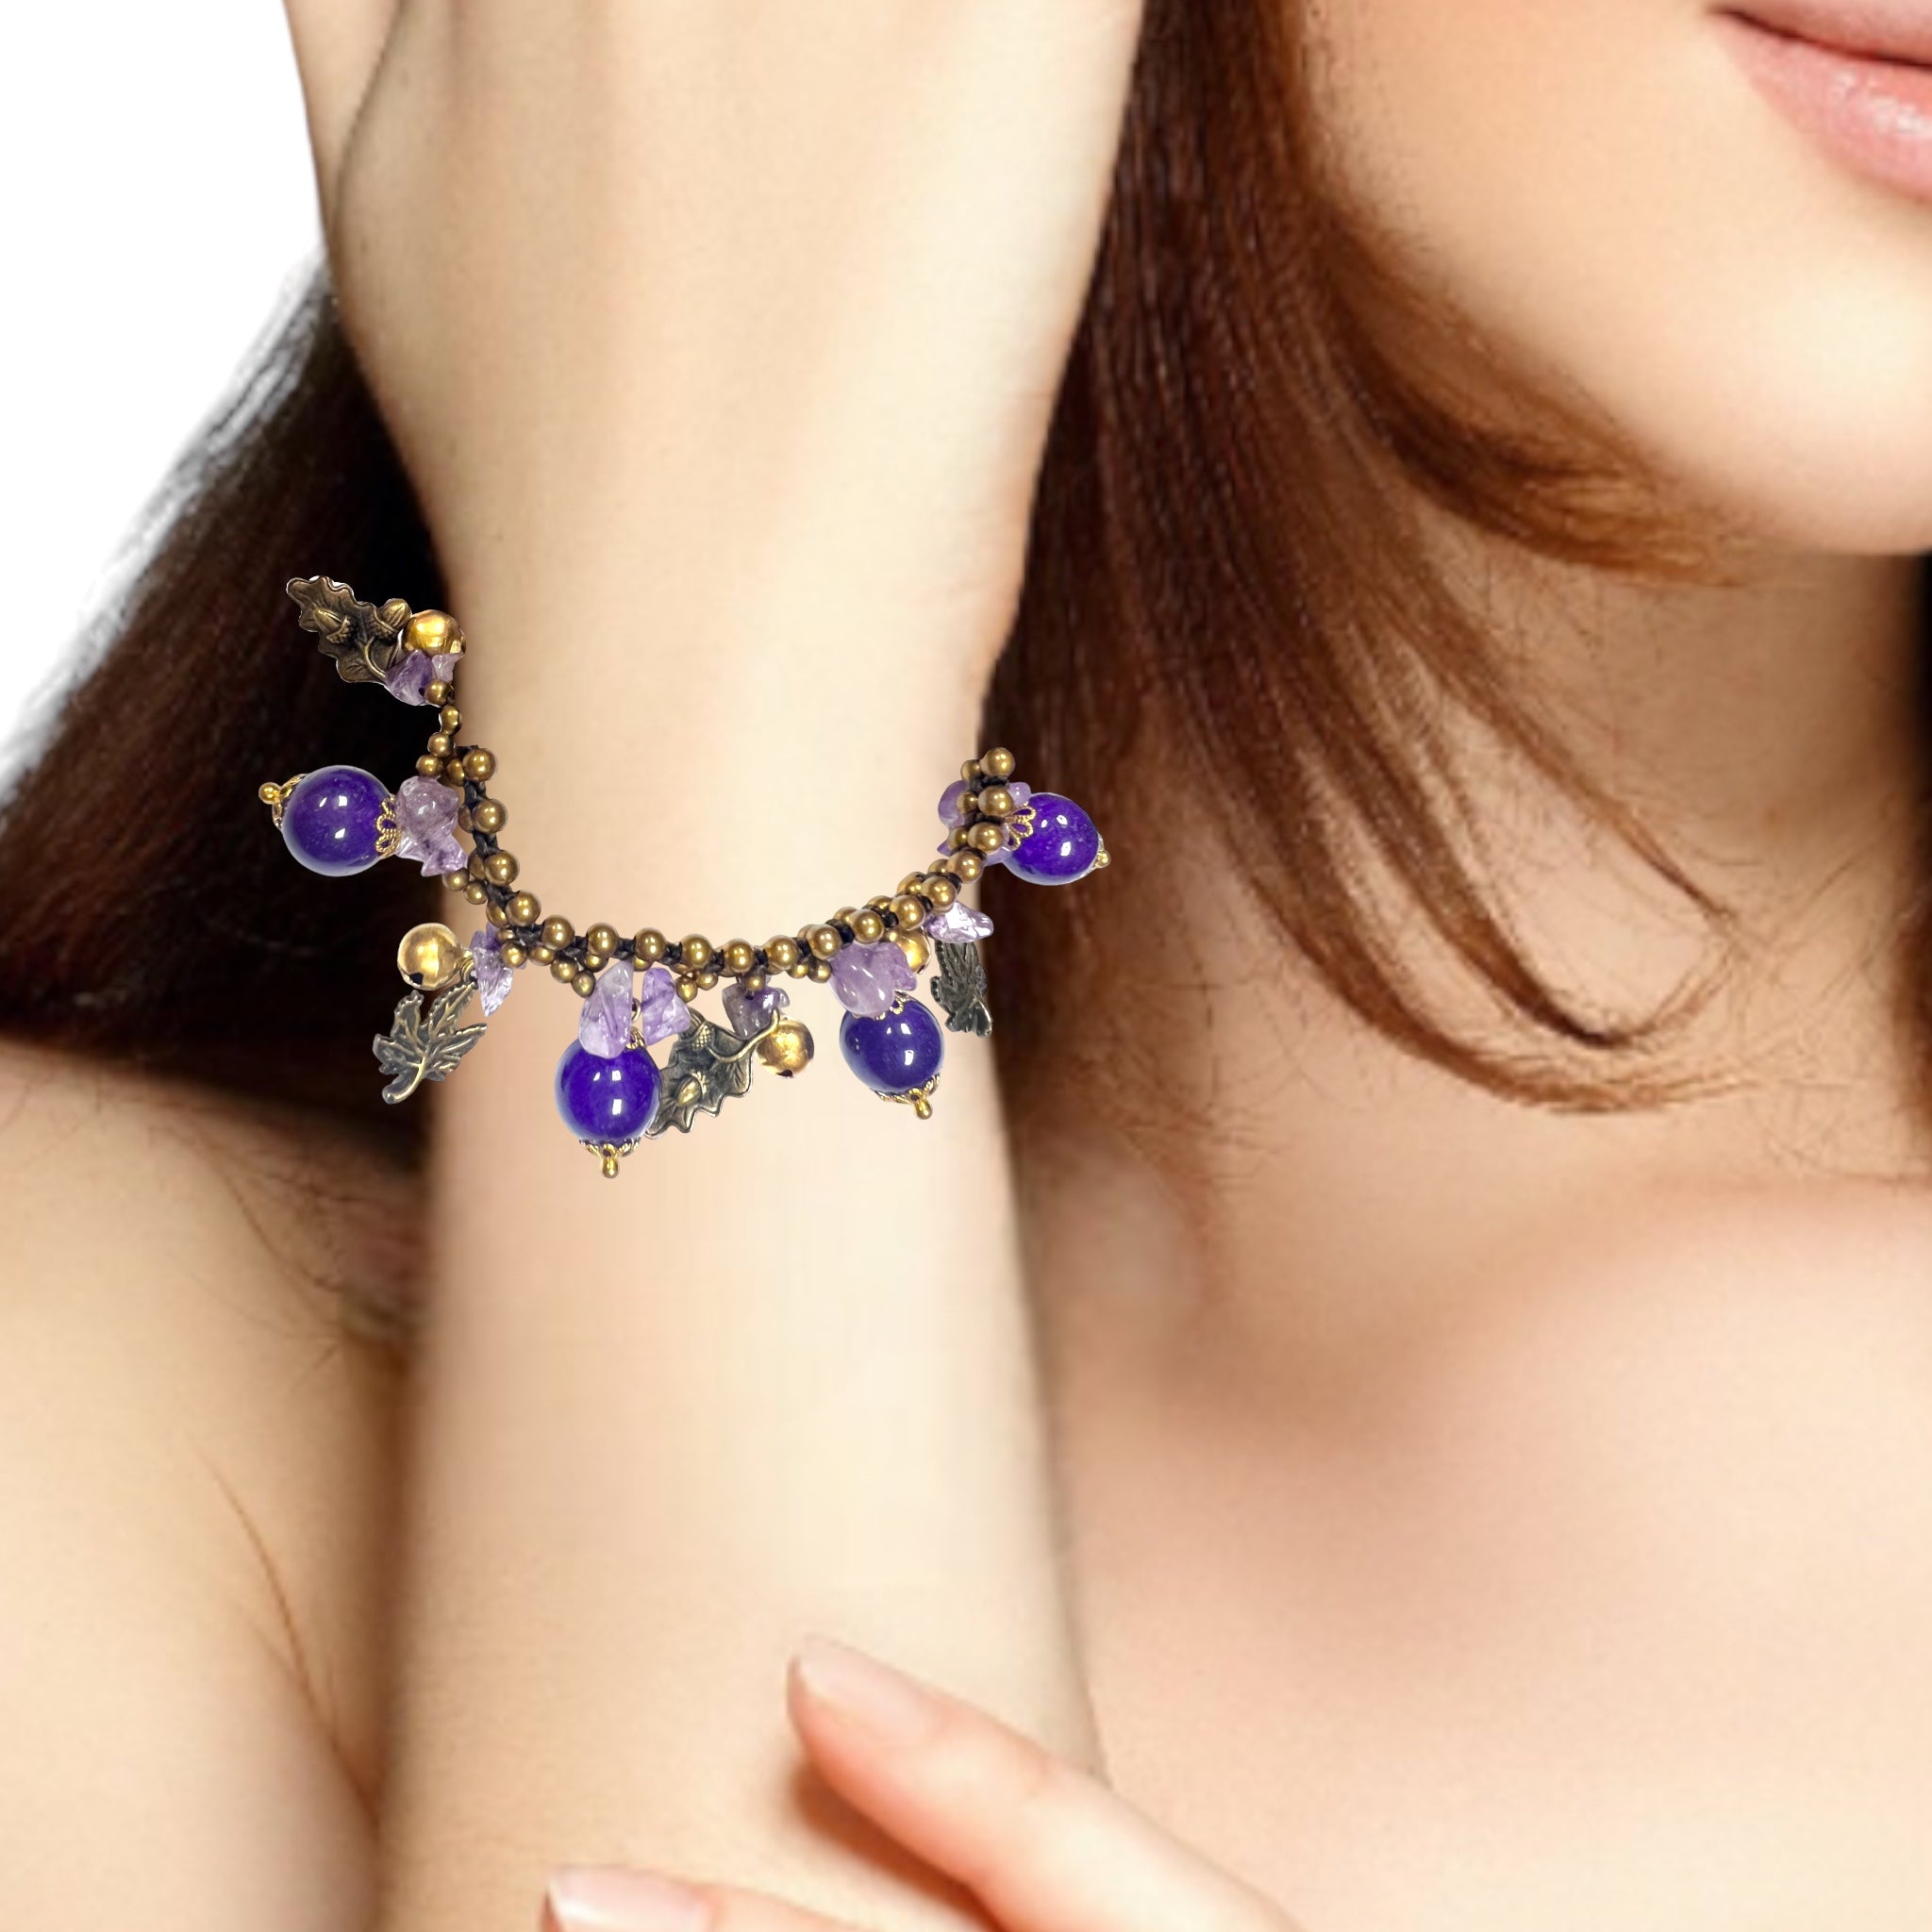 Handmade Bracelet Amethyst Leaves Bells Charms Beaded 8 Inch Jewelry